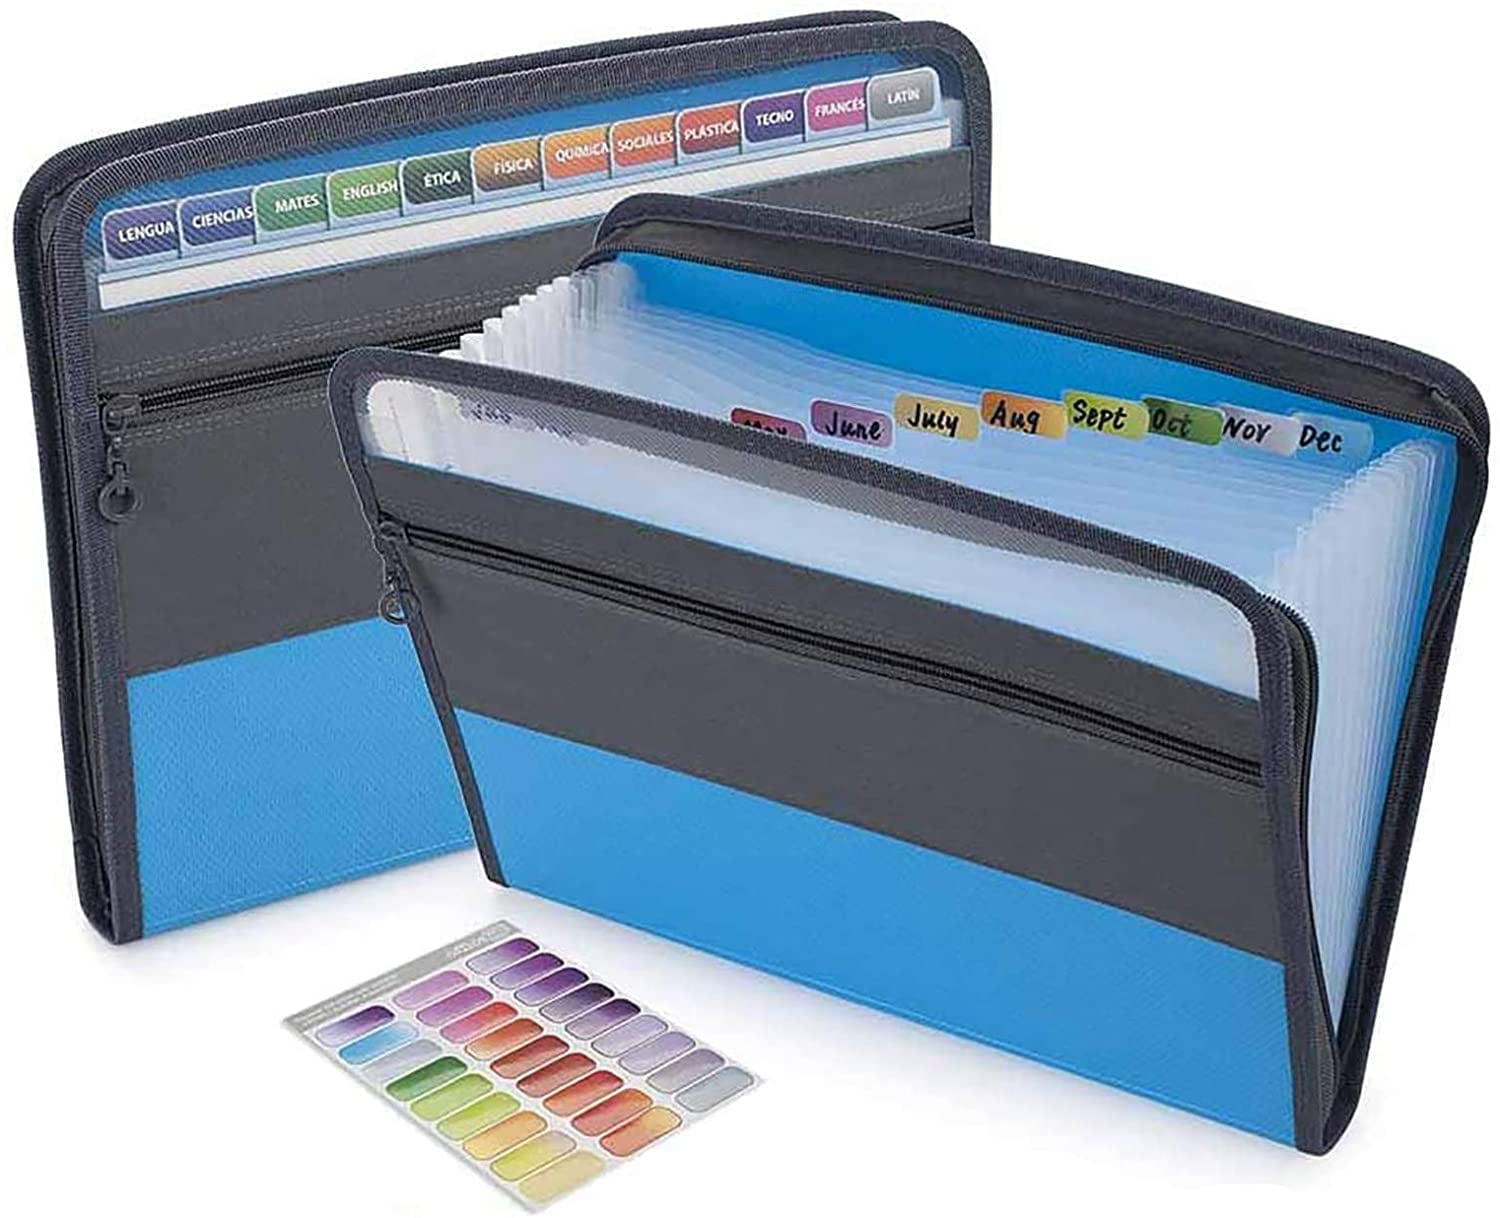 FYY File Folder, PU Leather A4 Document Holder File Organizer Filing  Envelope Portfolio Case Tablet Sleeve with Magnetic Snap Closure for Home  School